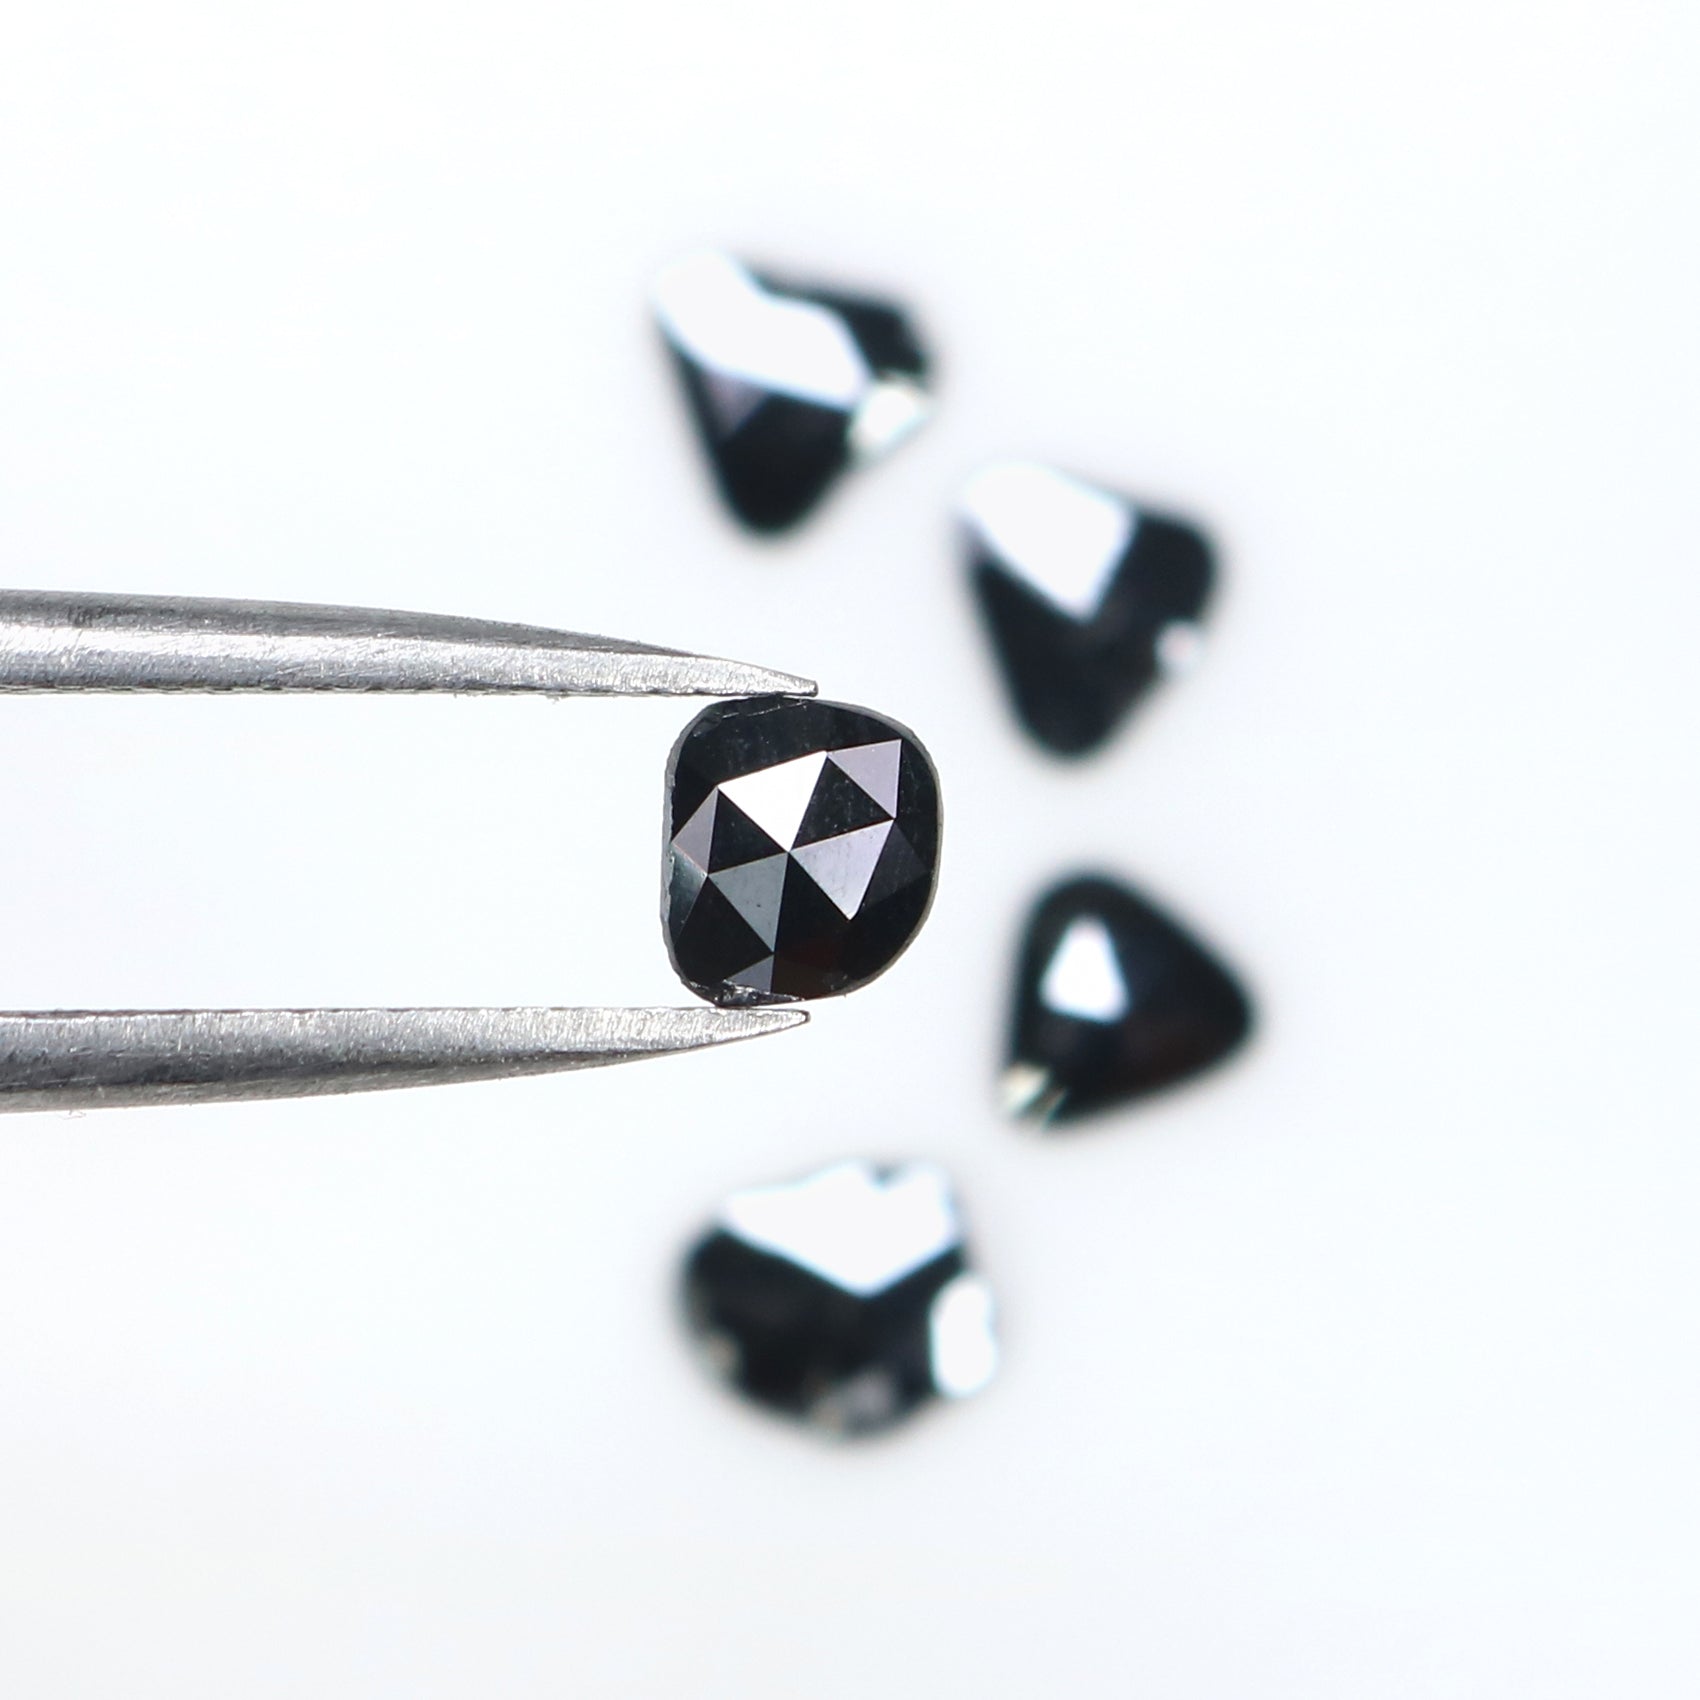 Natural Loose Slice Black Color Diamond 1.11 CT 5.52 MM Slice Shape Rose Cut Diamond KR2614